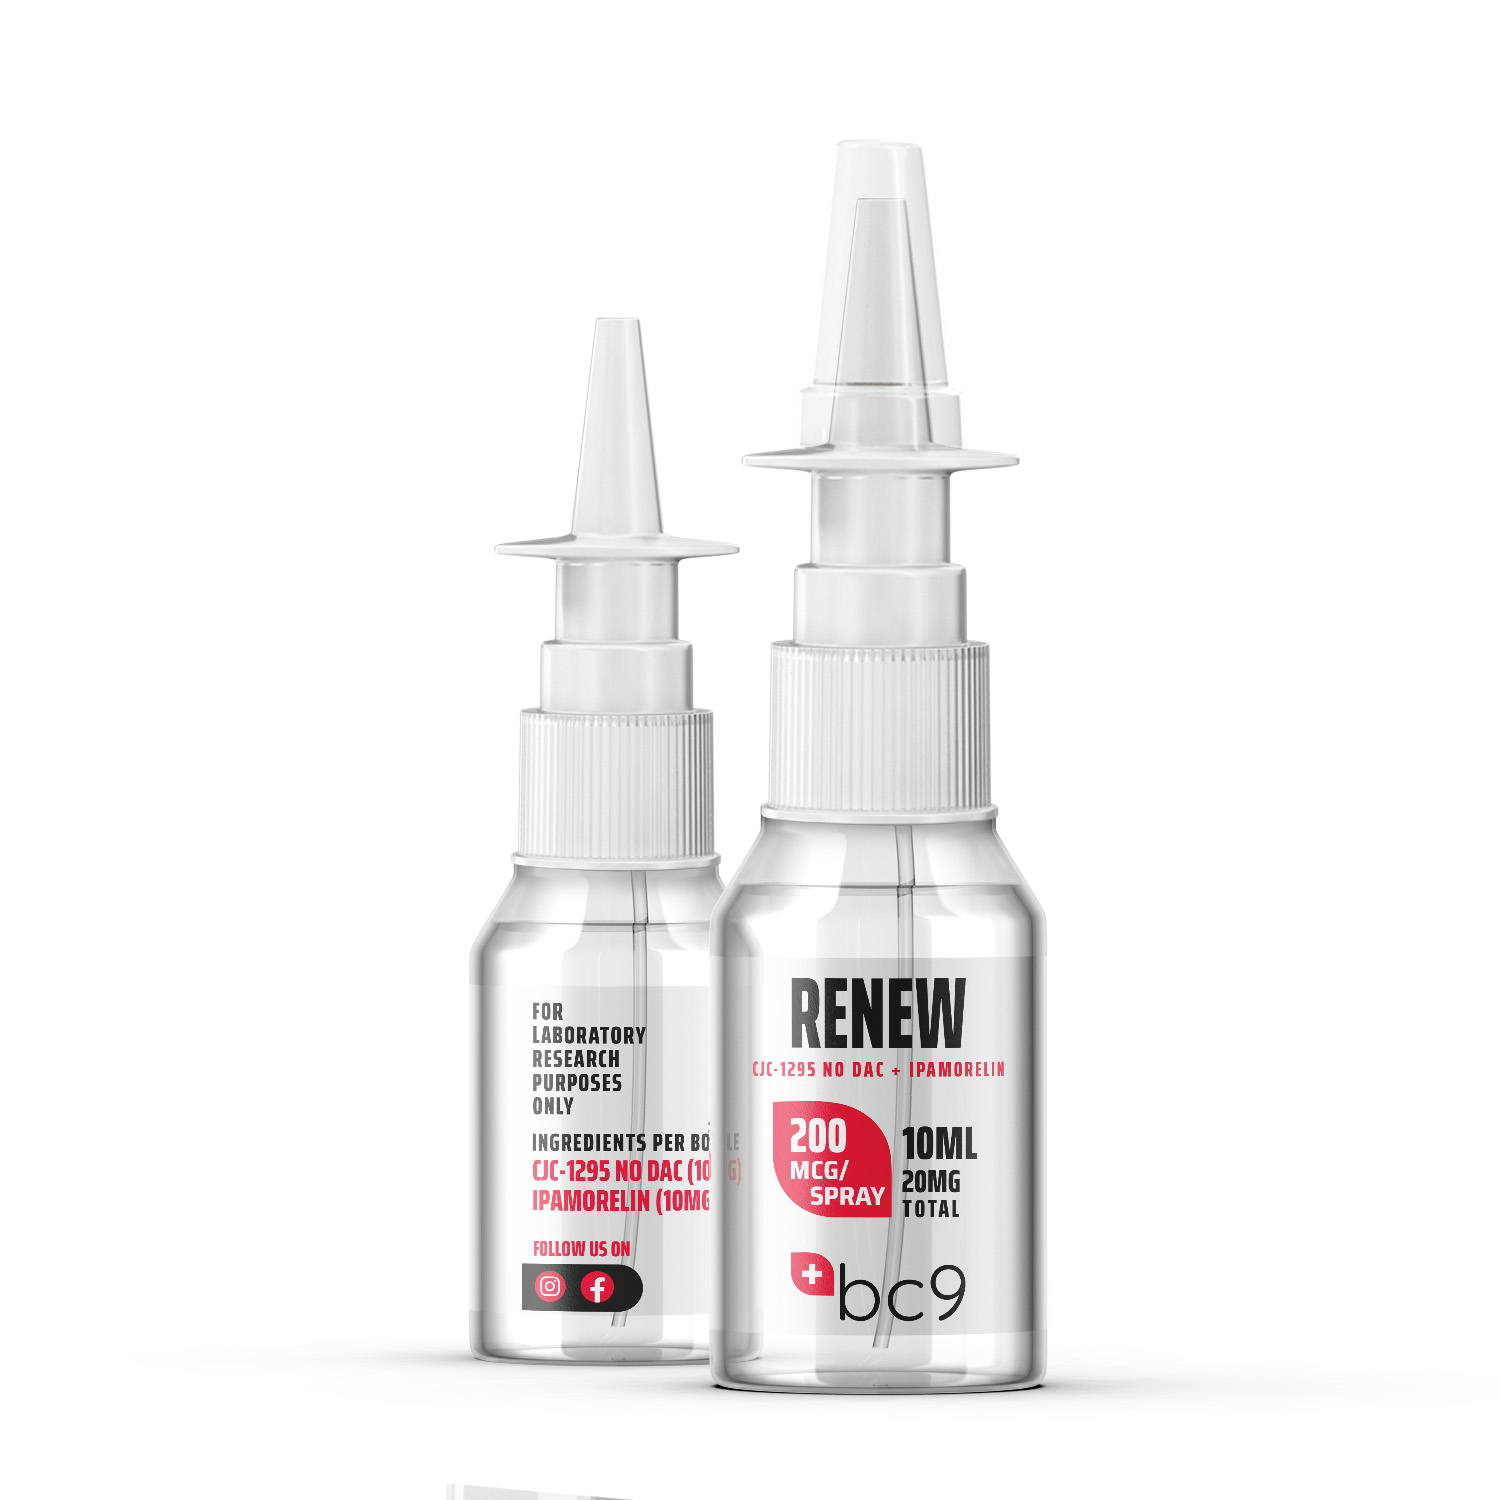 Renew Spray (CJC-1295 No Dac + Ipamorelin) | BC9